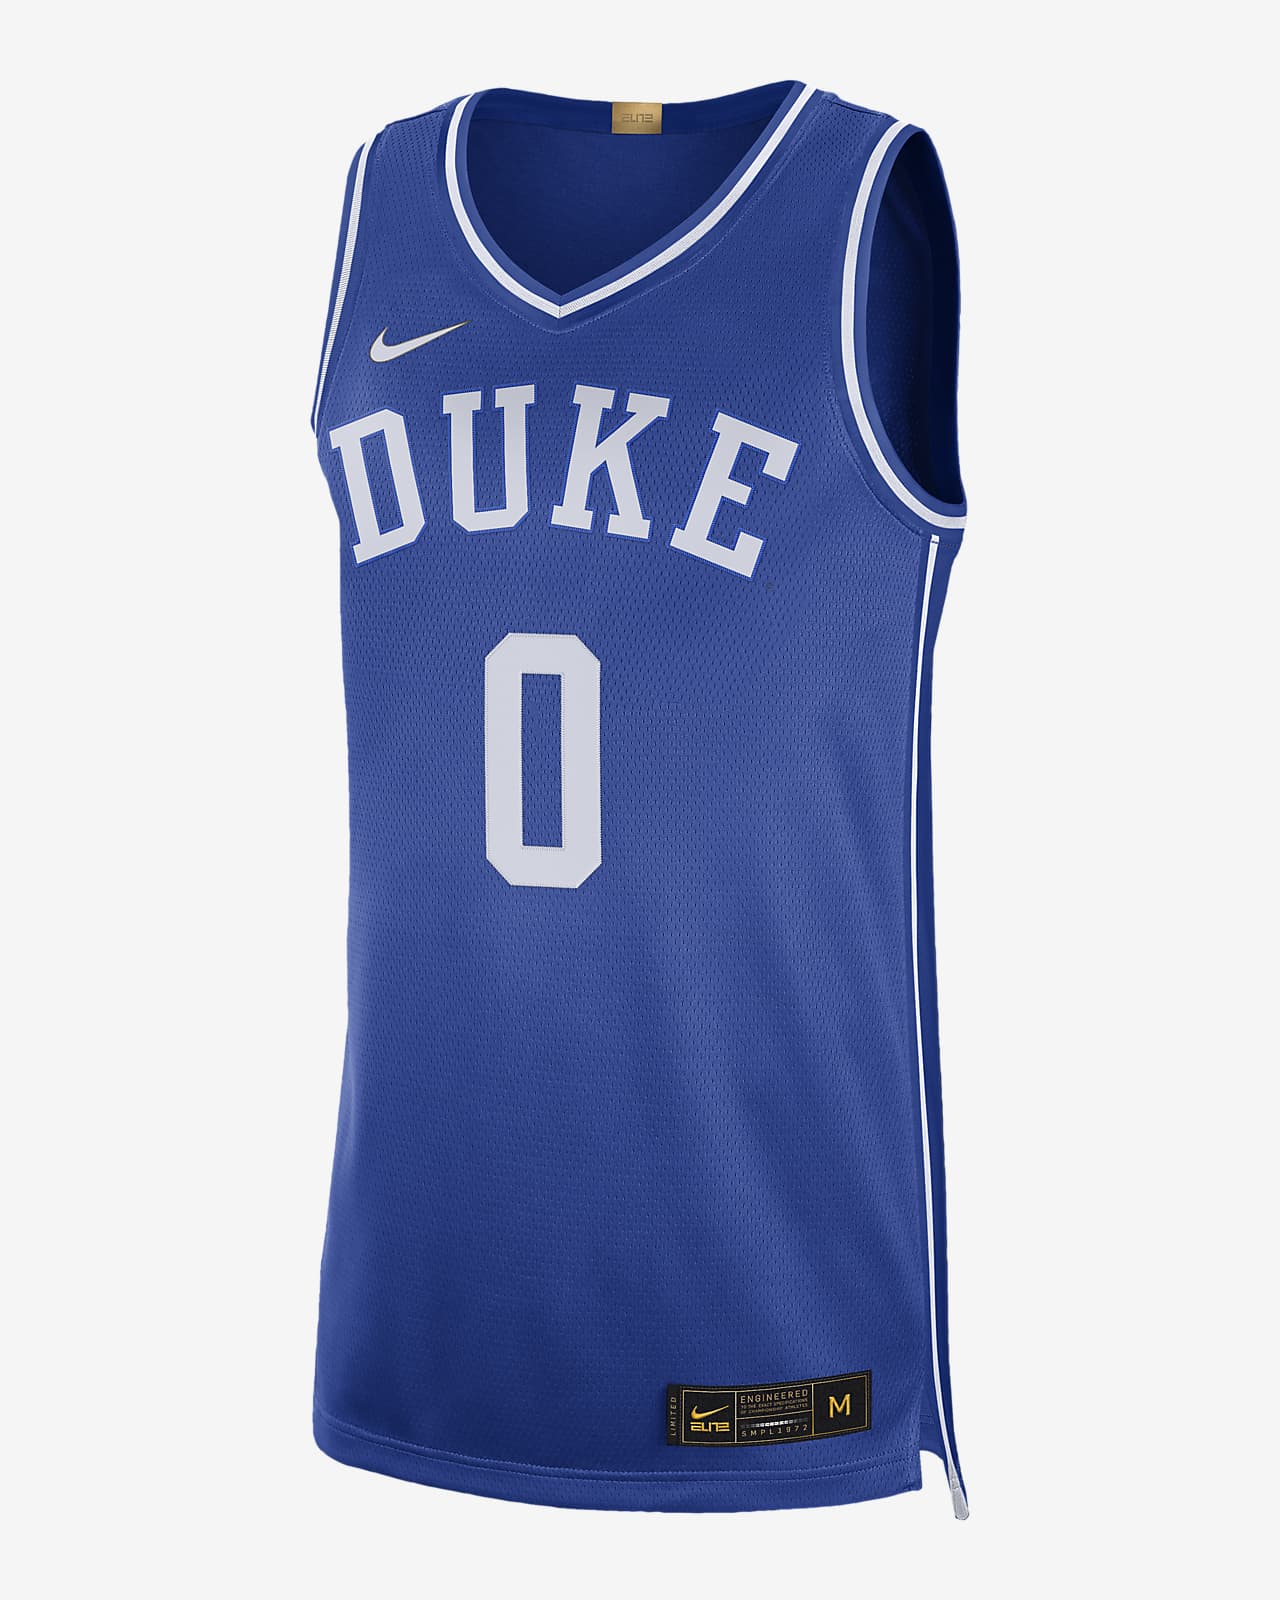 Duke Men's Nike Basketball Jersey. Nike.com